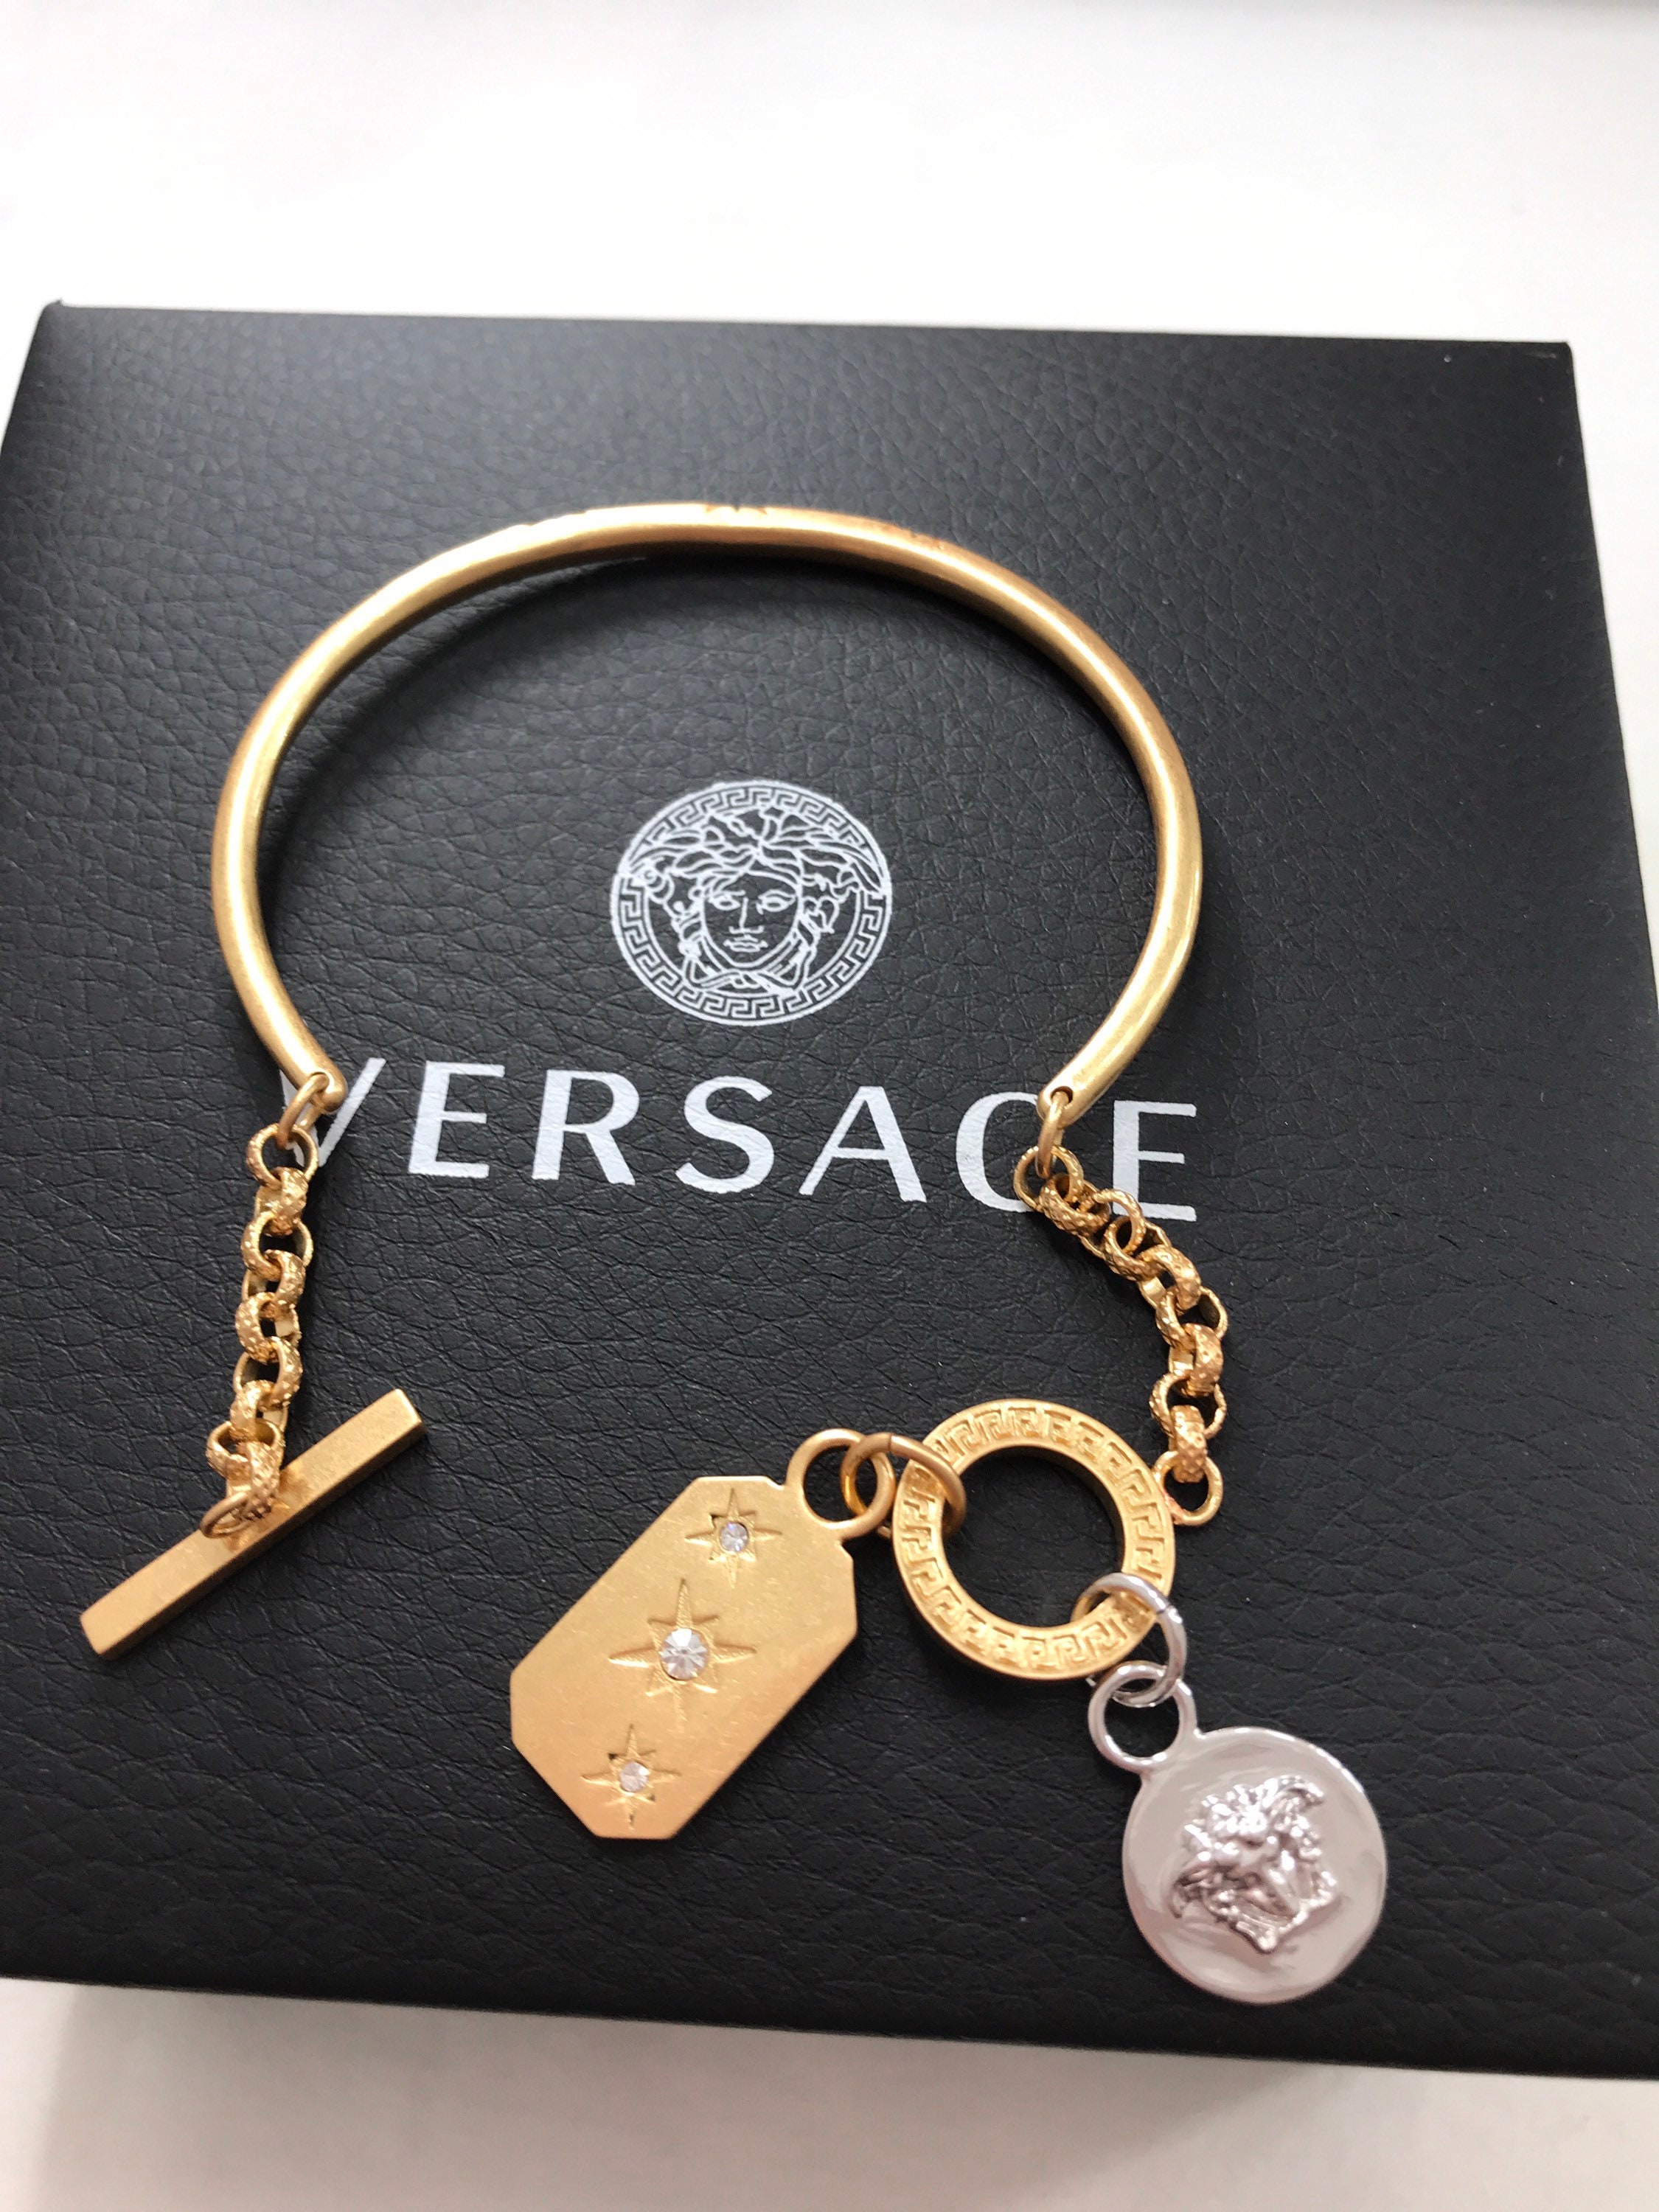 Original Versace gold Toggle Bangle/Bracelet with box | Etsy